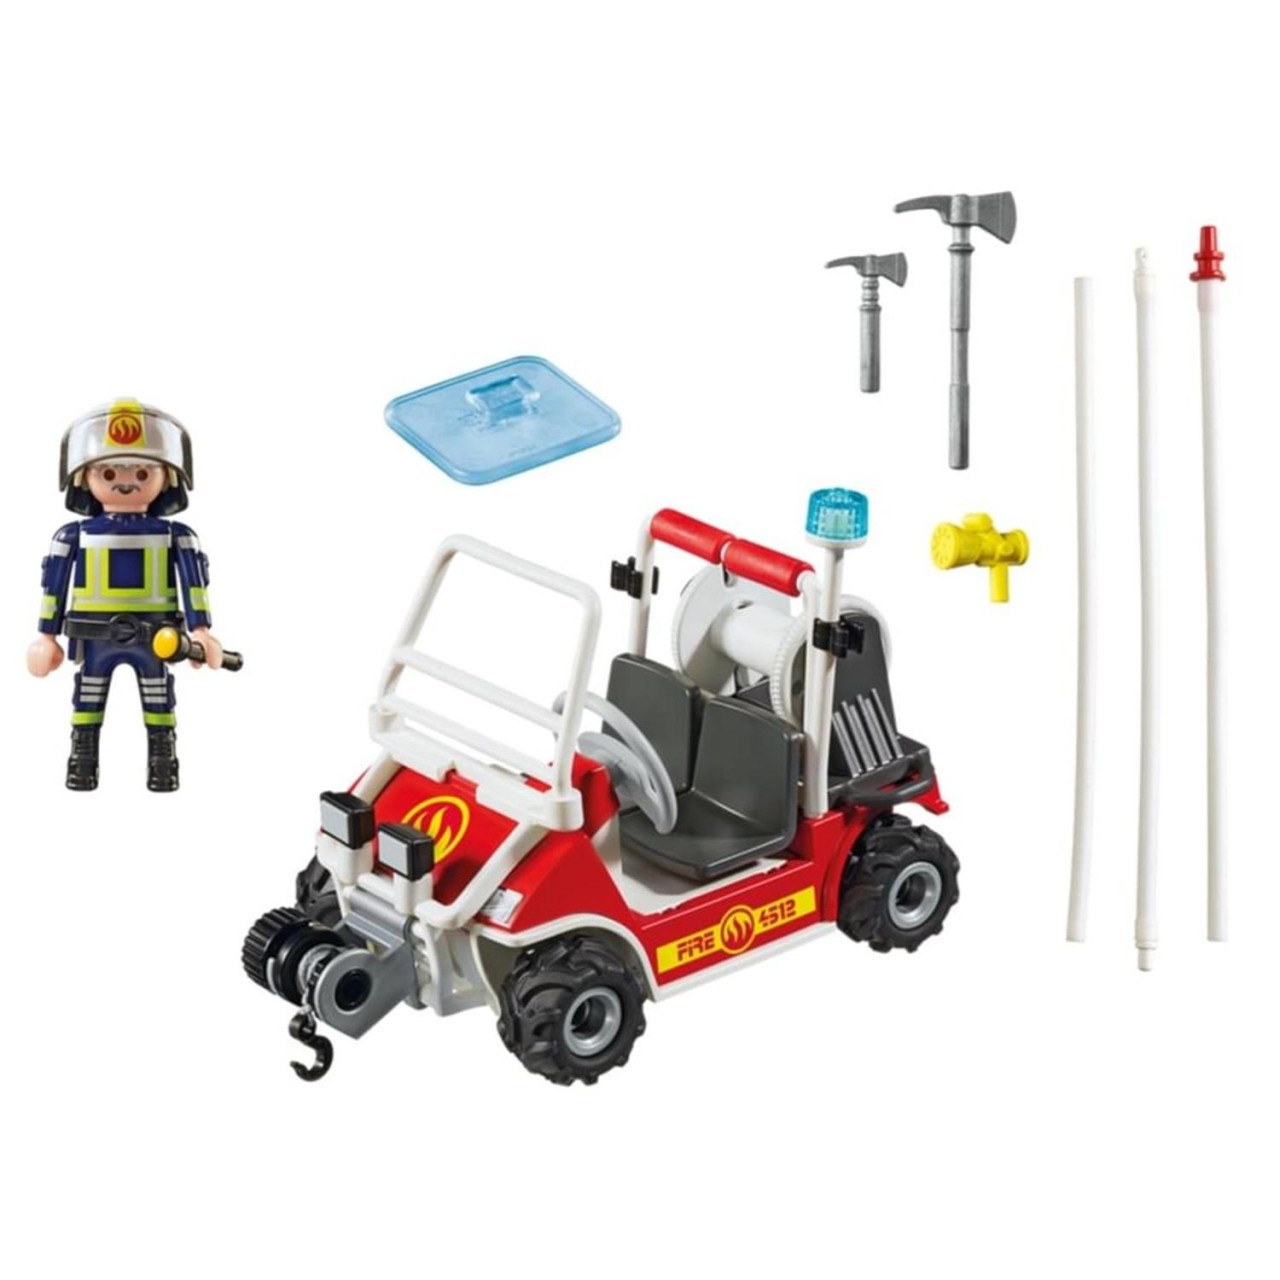 Playmobil 5398 Feuerwehrkart